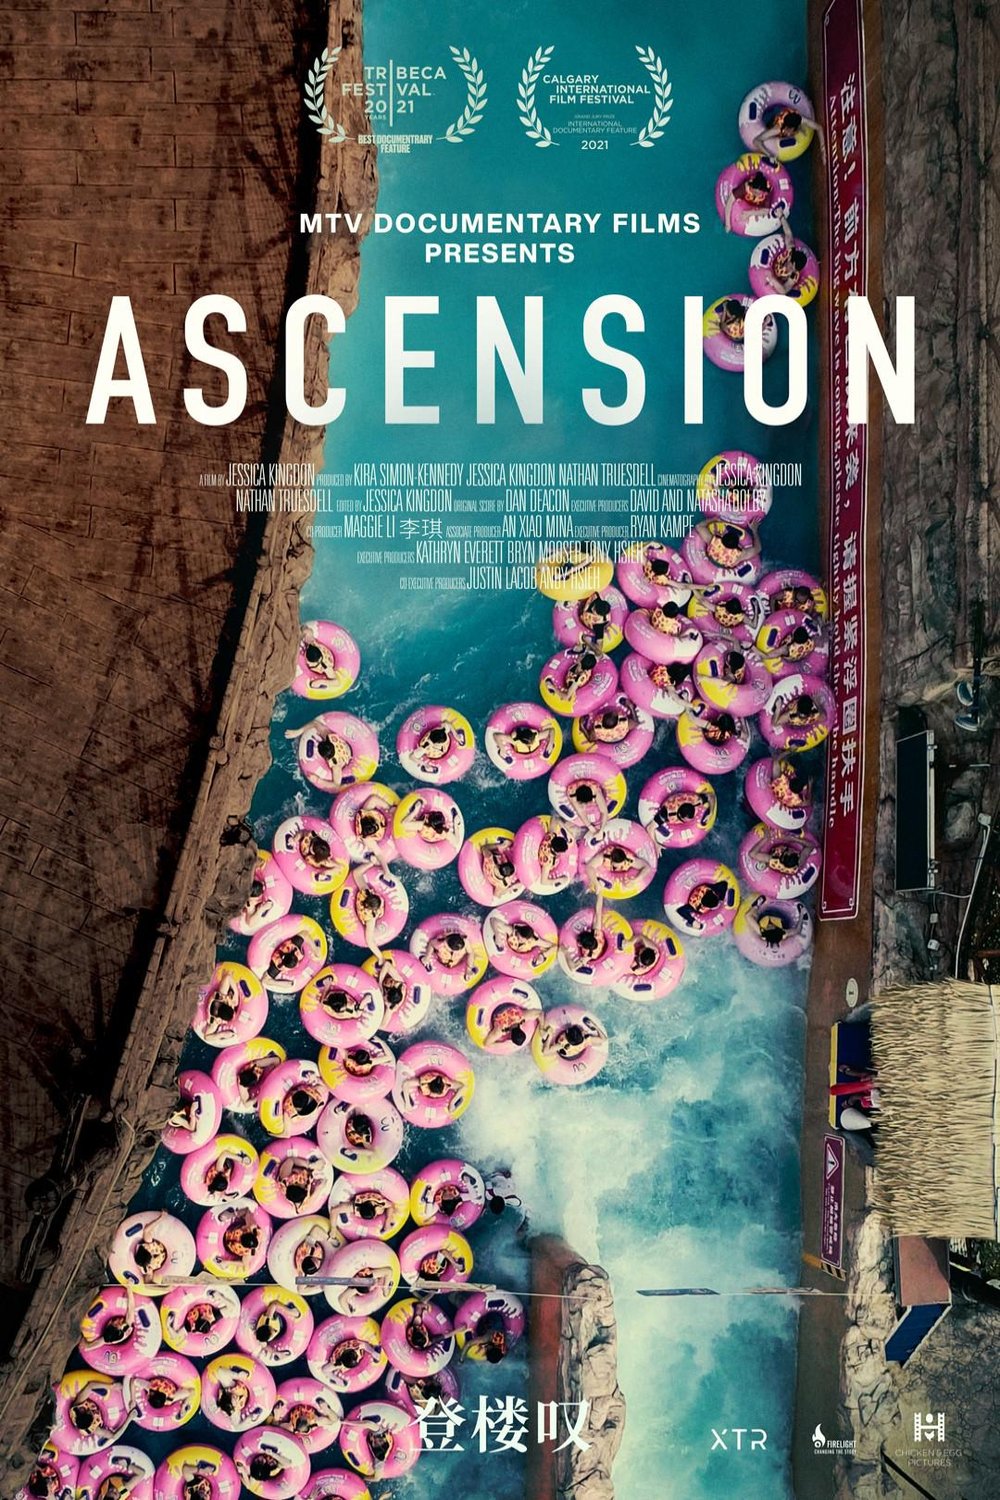 L'affiche originale du film Ascension en mandarin